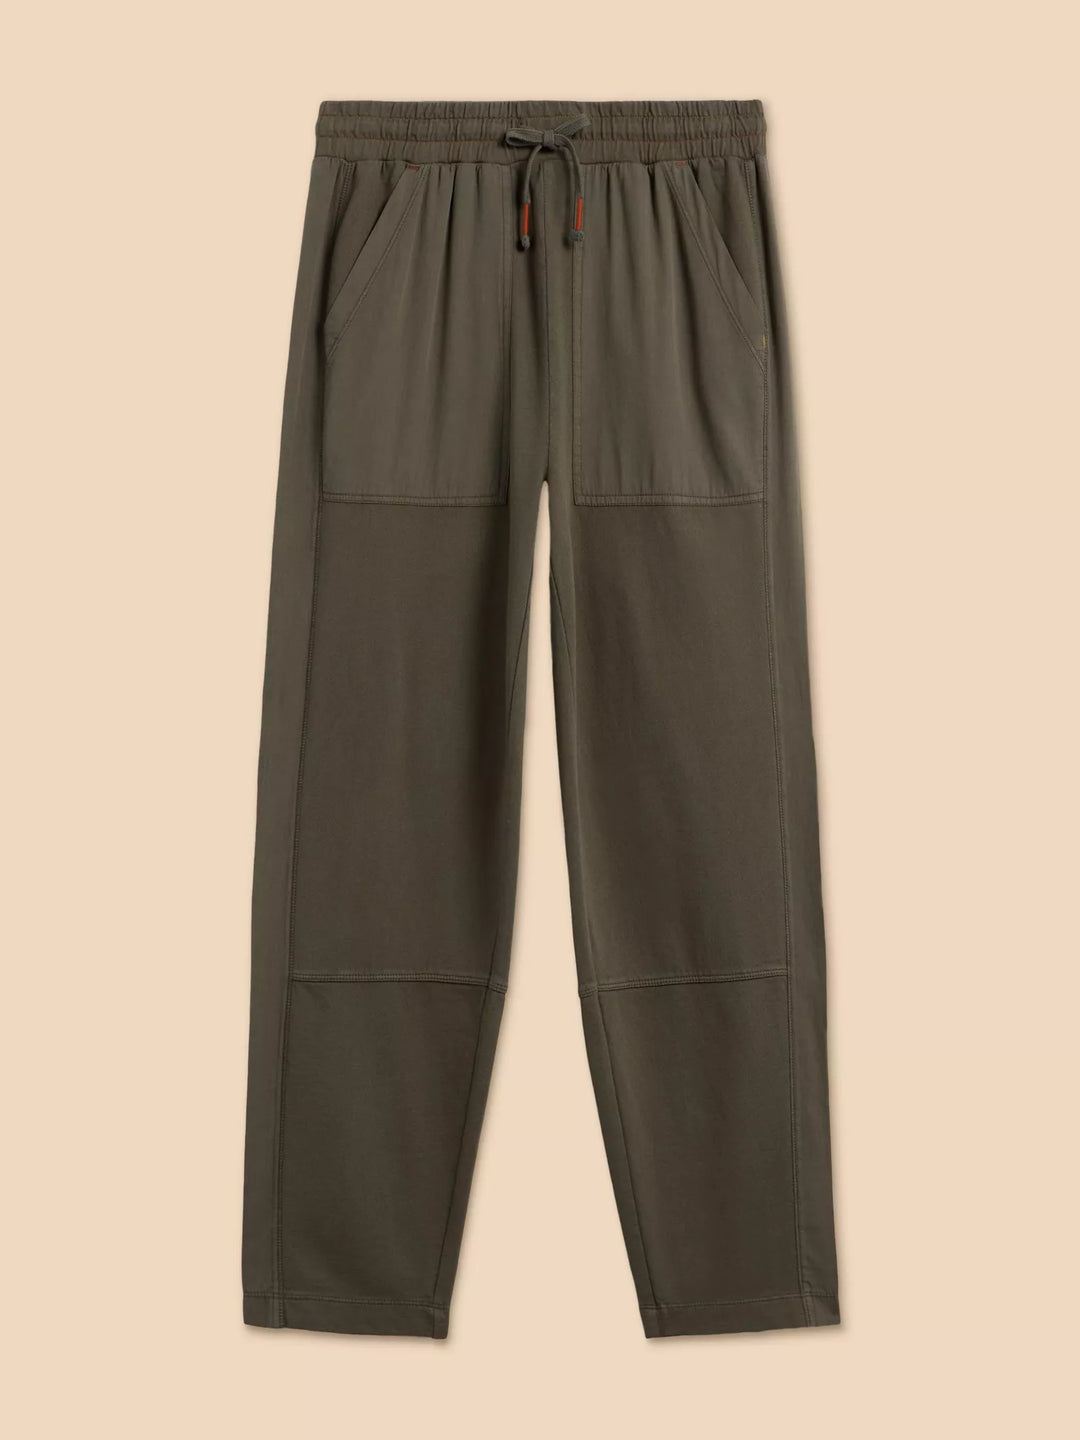 Pantalon hyper-confortable avec poches géantes